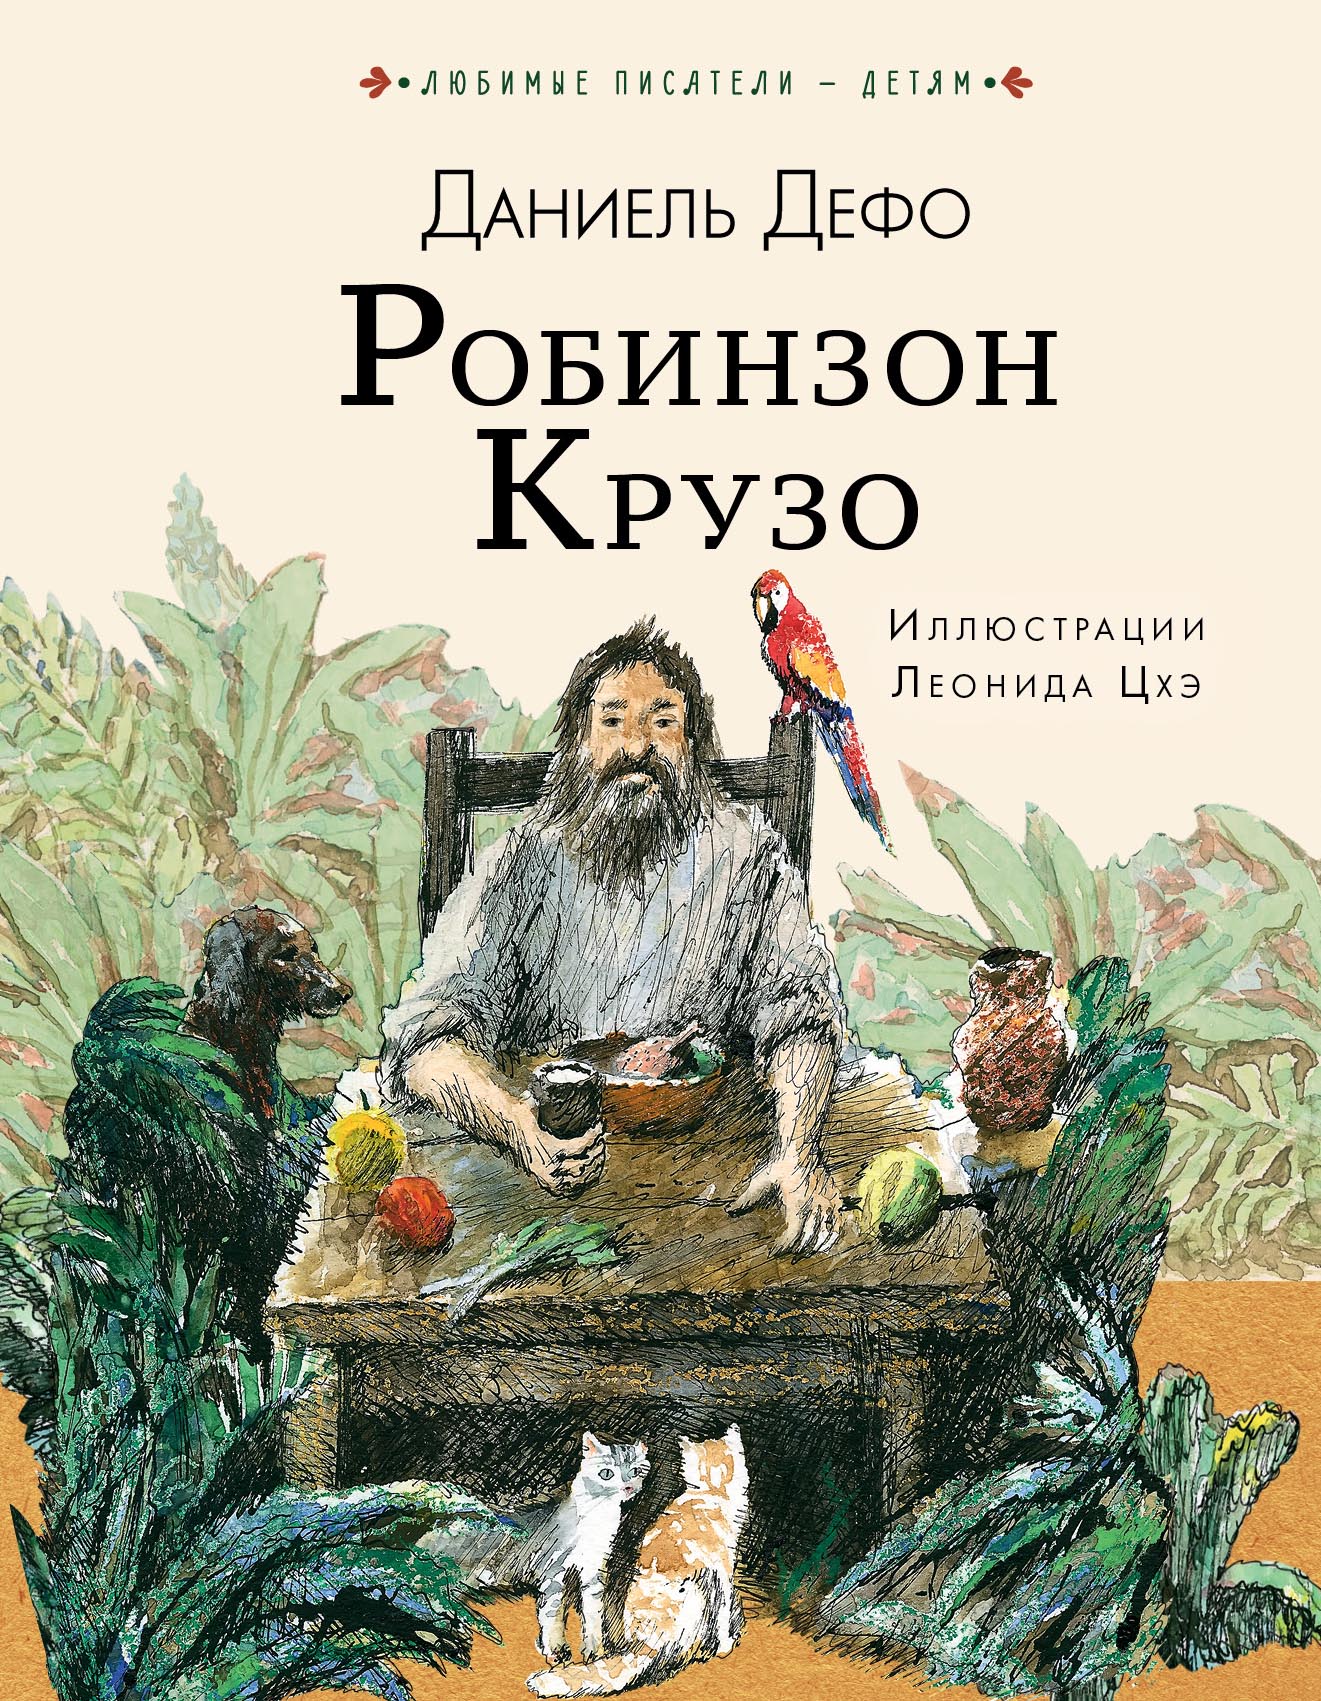 Book “Робинзон Крузо” by Даниель Дефо